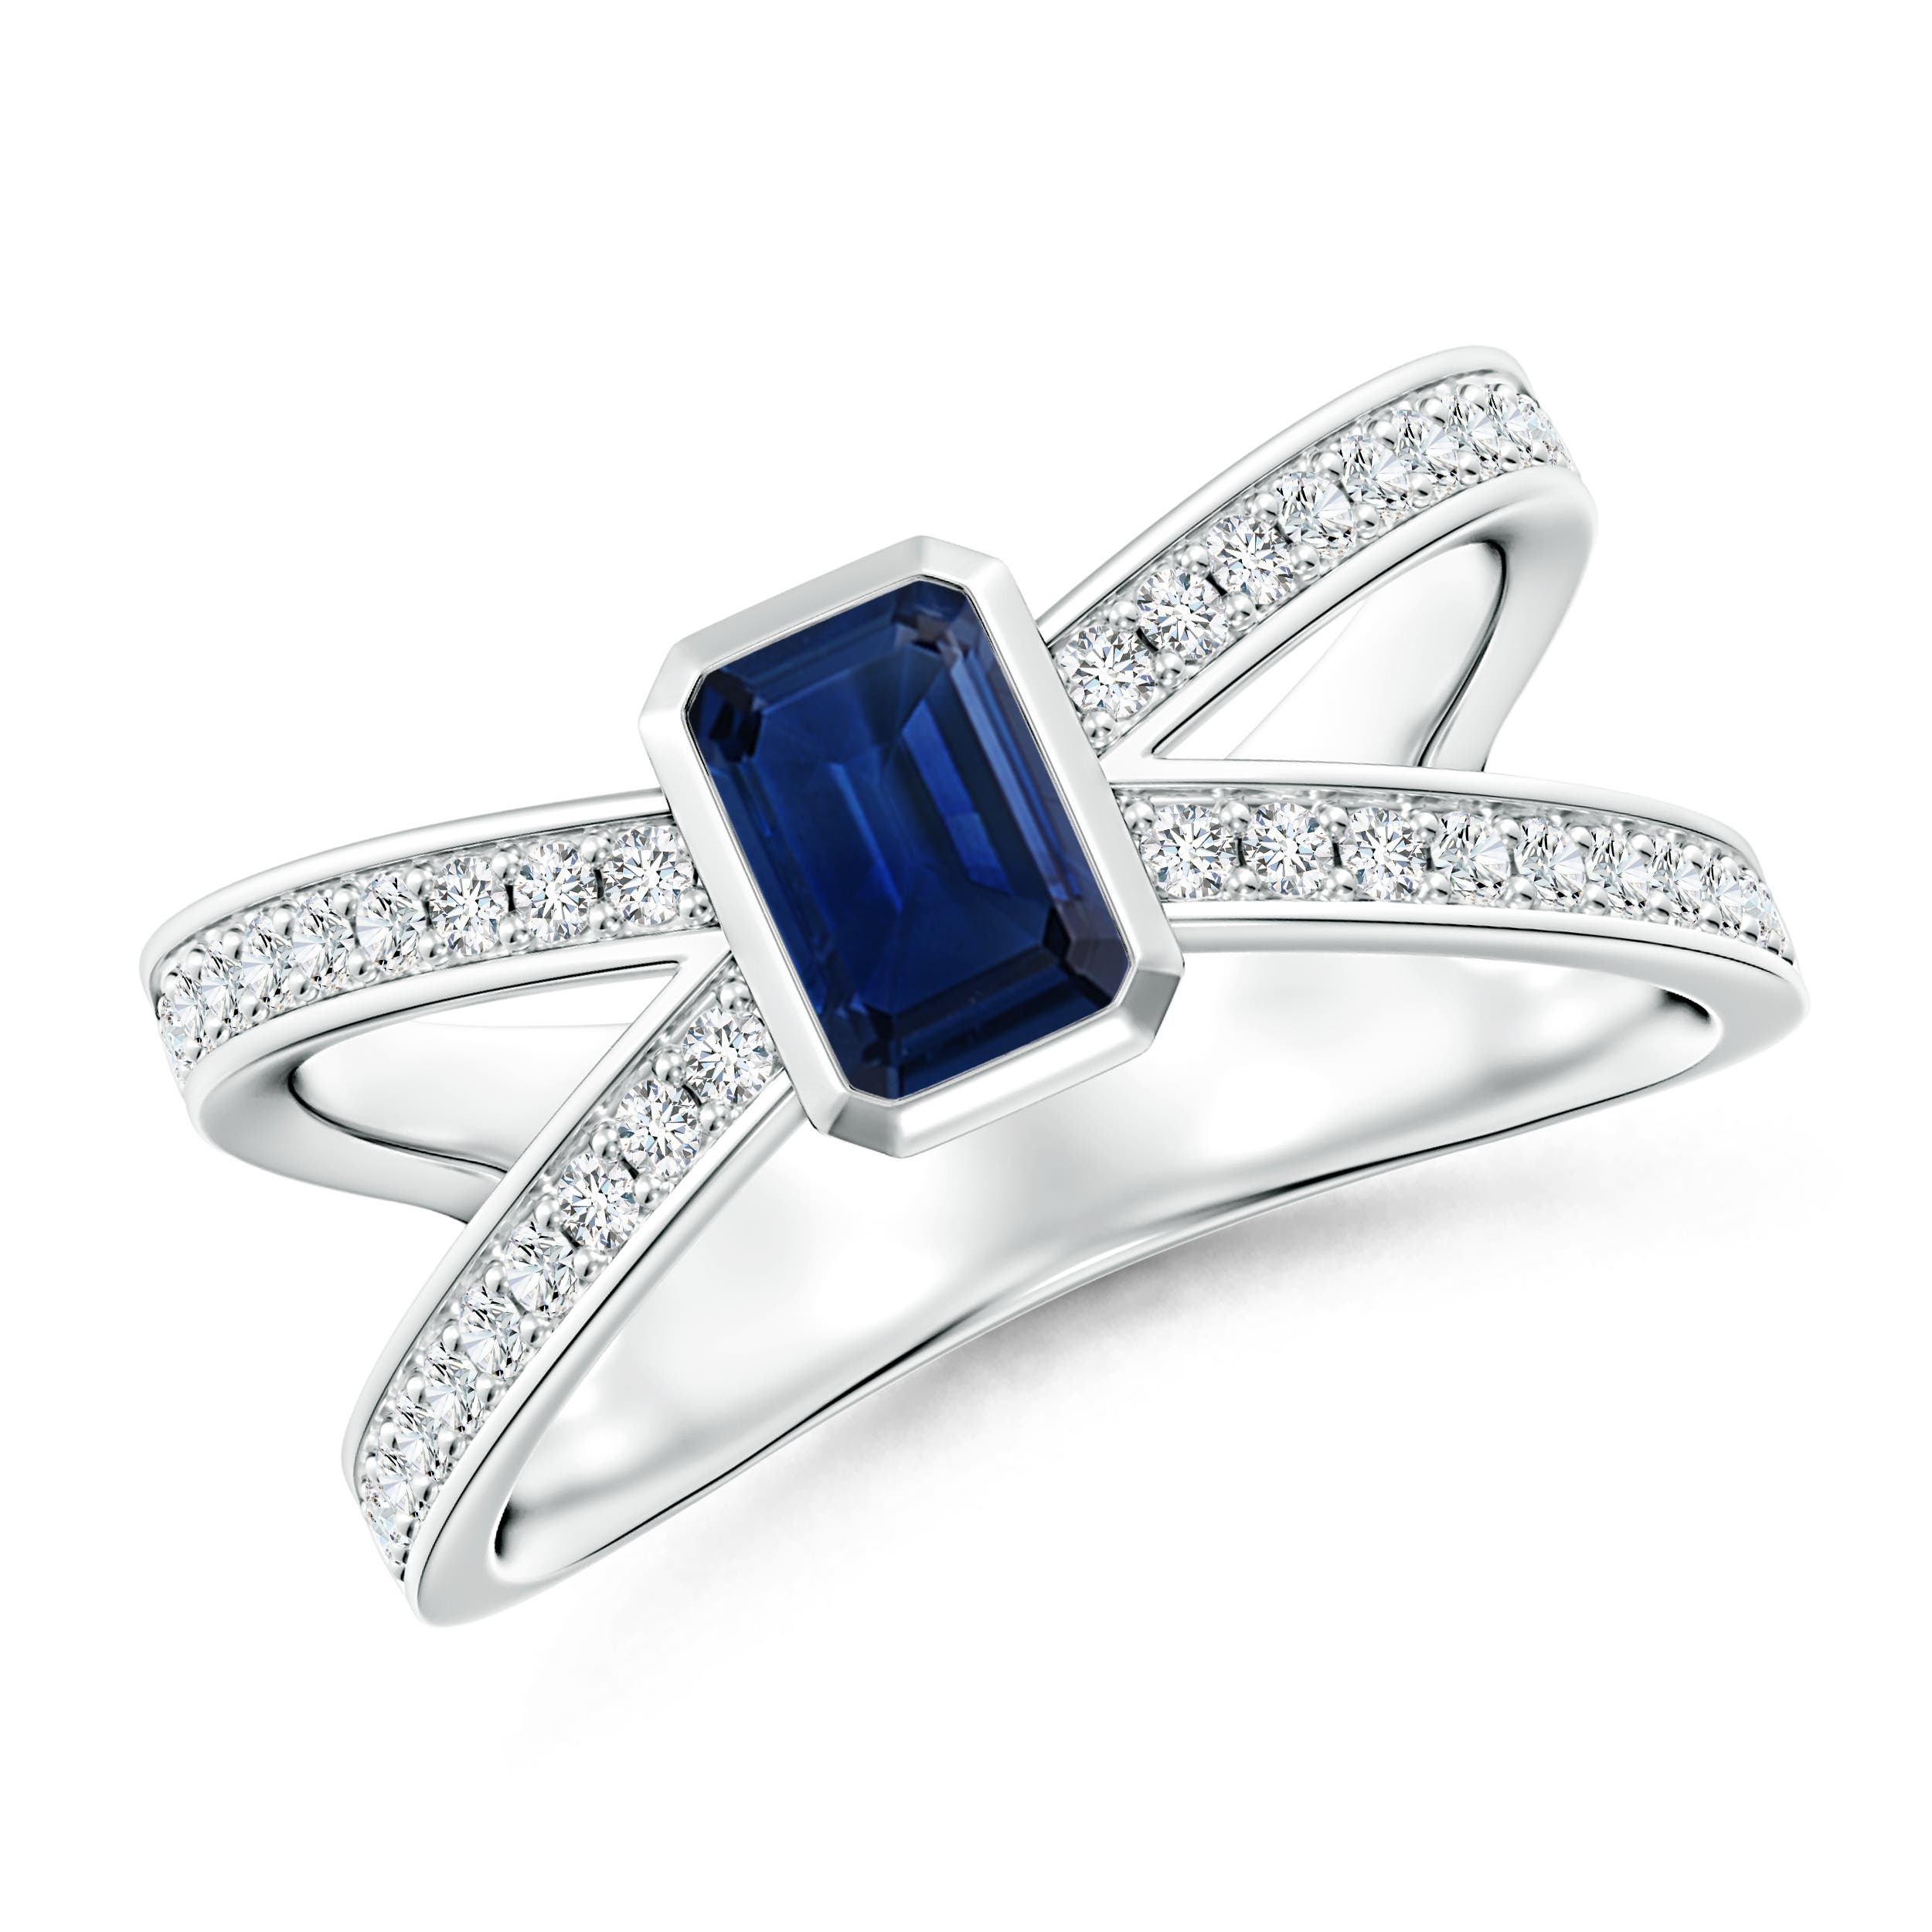 Emerald-Cut Blue Sapphire Criss Cross Solitaire Ring